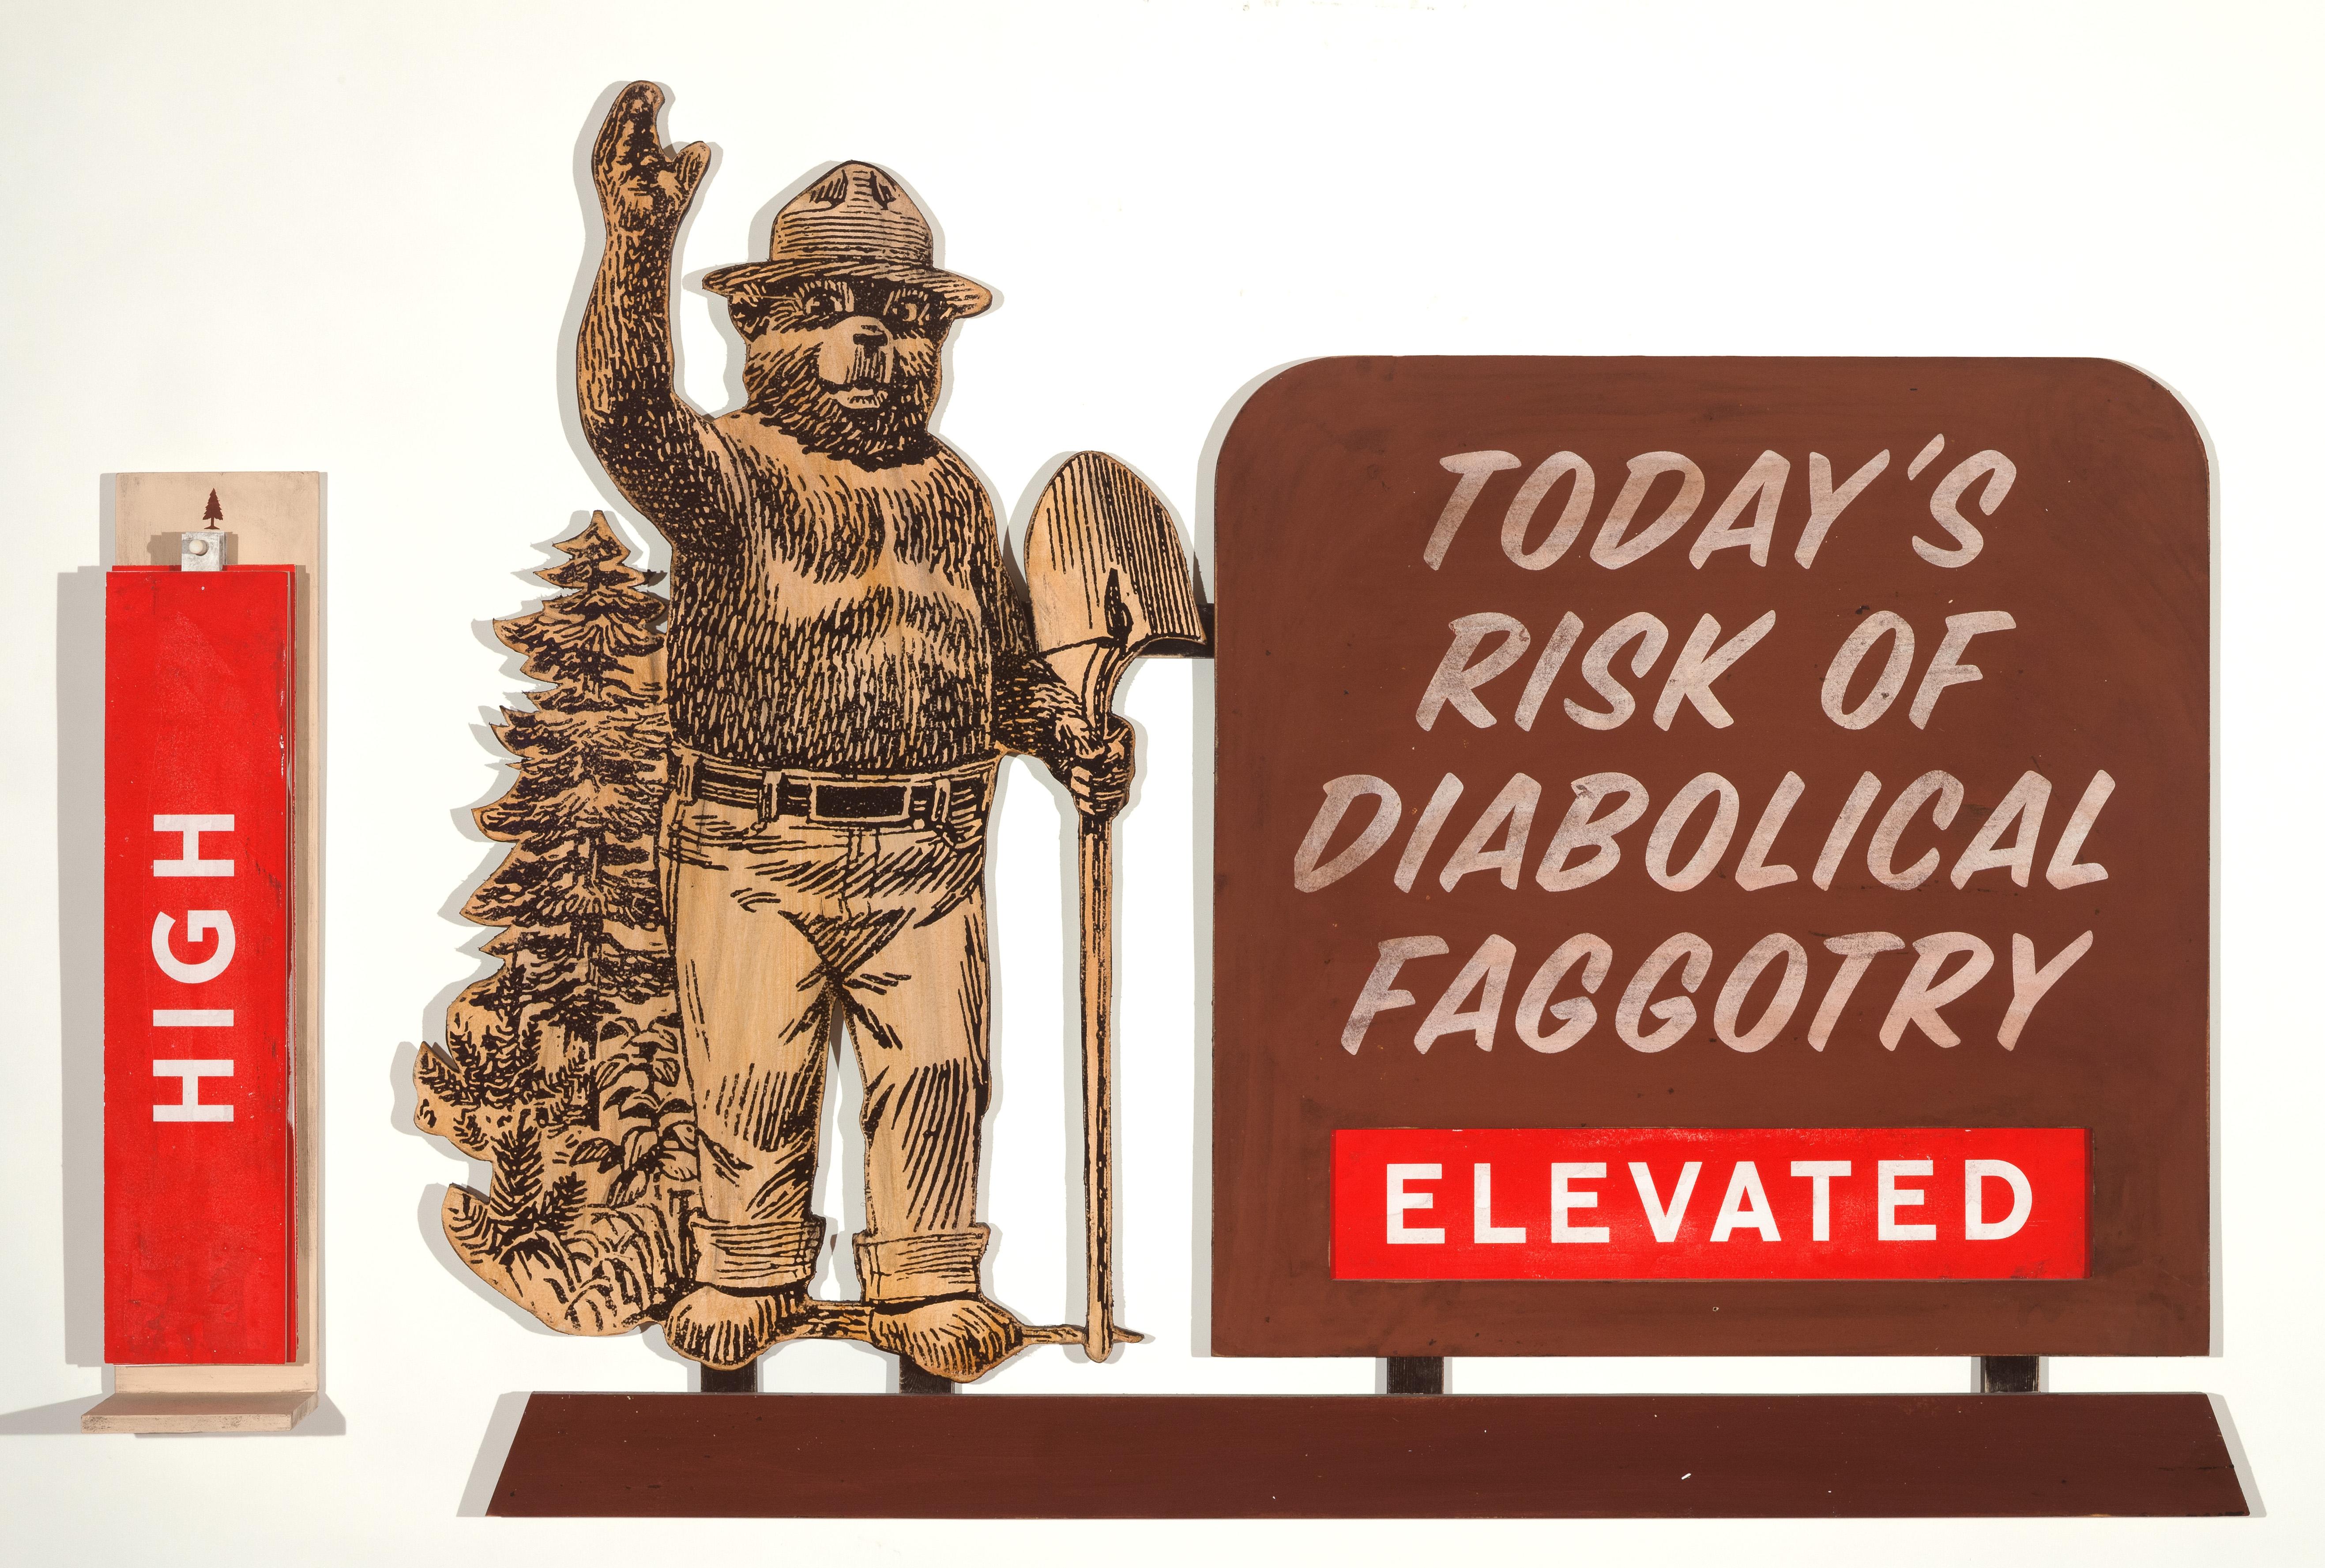 Today's Risk of Diabolical Faggotry - Sculpture by Skylar Fein